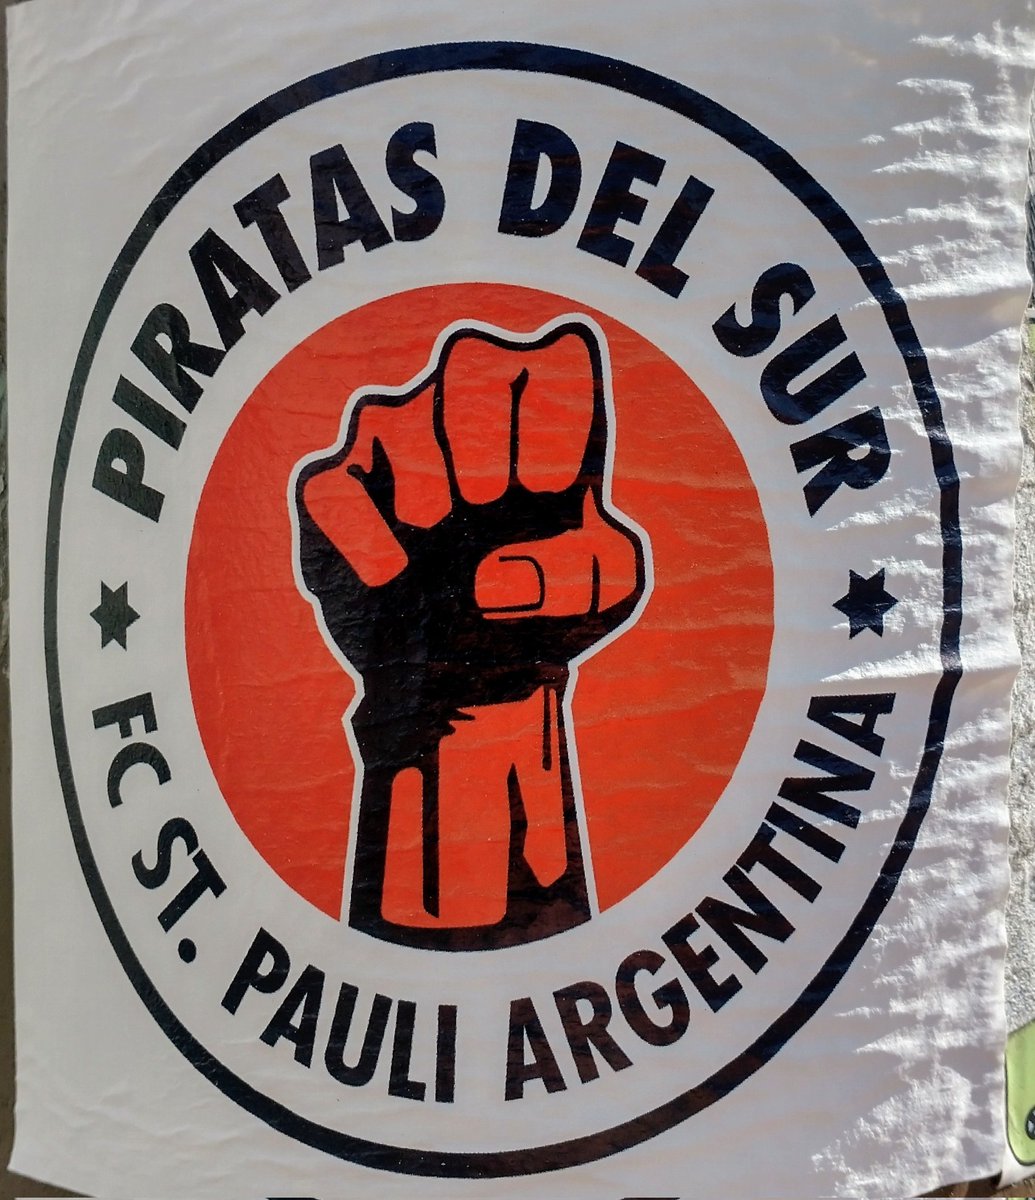 Piratas del Sur
#stpauli #fcstpauli #stpauli #fcsp #sticker #stickers #aufkleber #piratasdelsur #piratas #Argentina